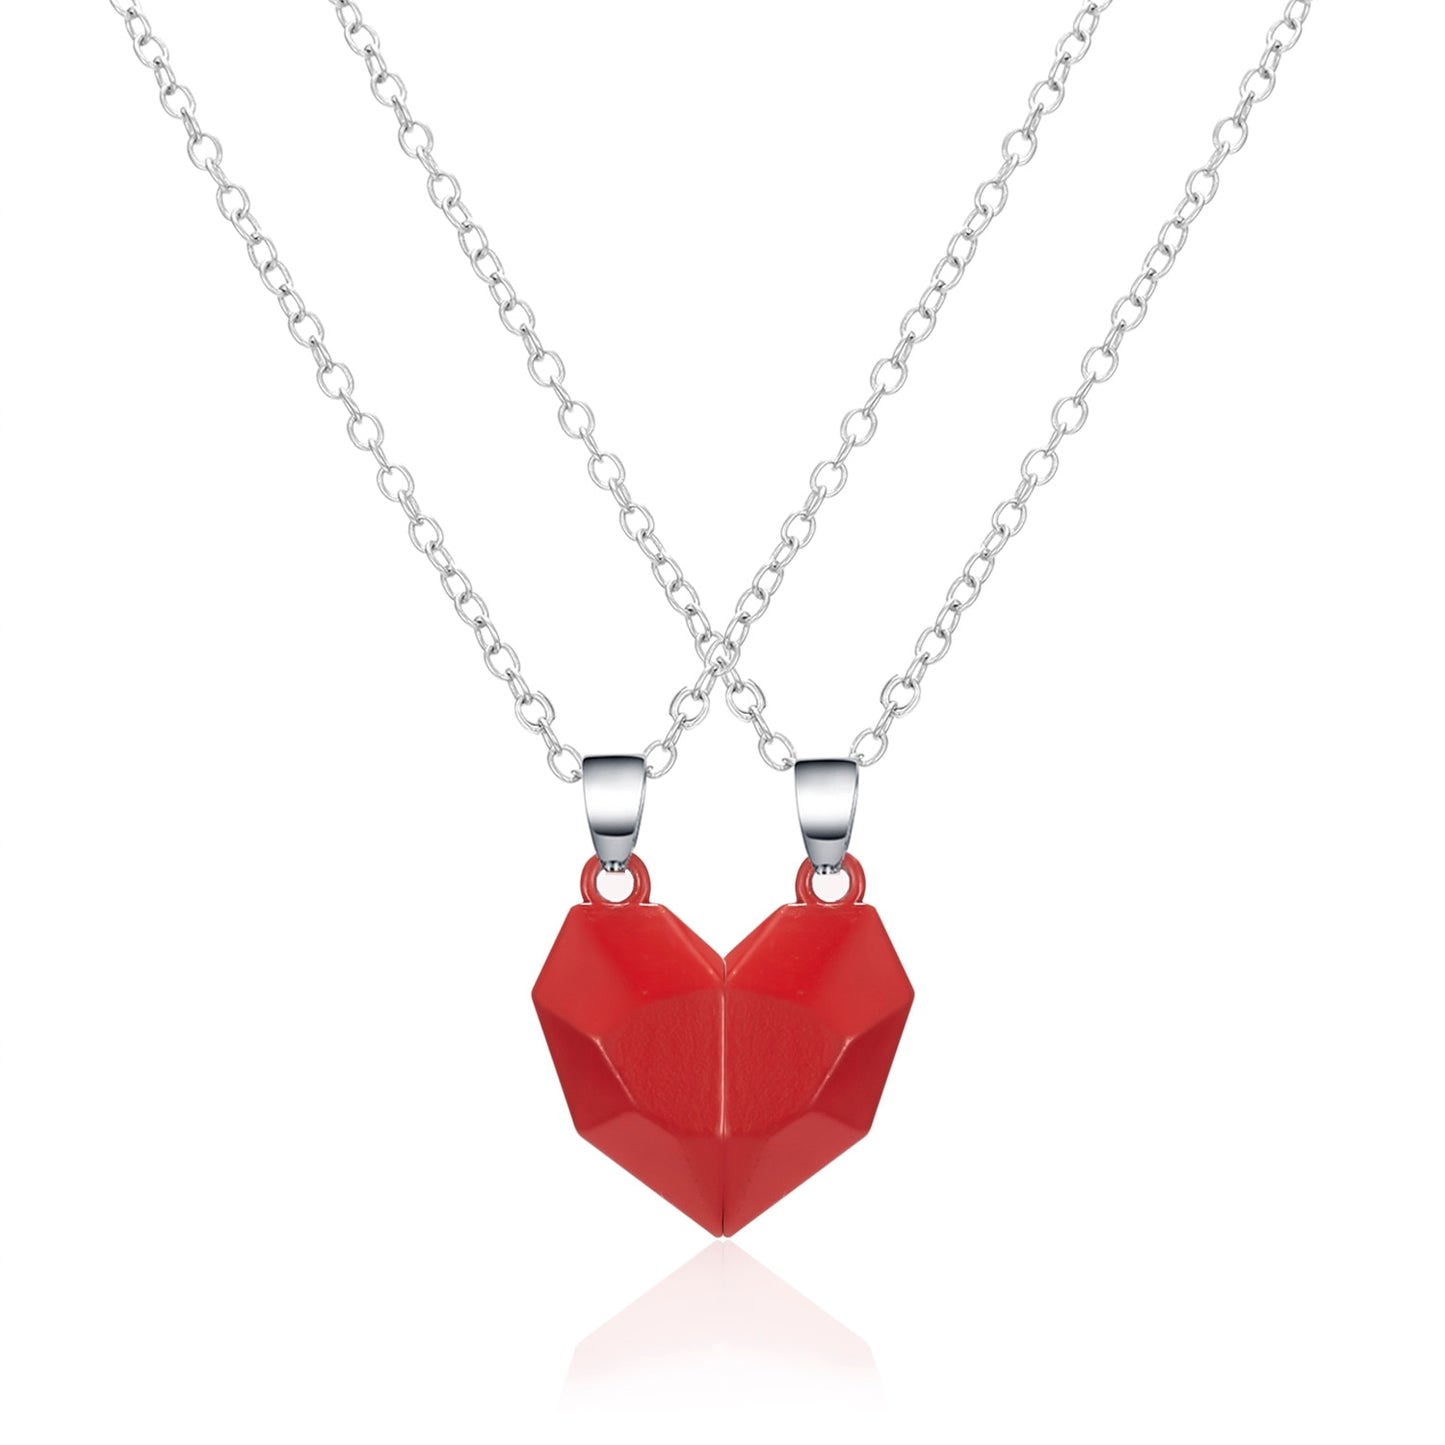 2Pcs/Lot Magnetic Couple Necklace Friendship Heart Pendant Distance Faceted Charm Necklace Women Valentine&#39;s Day Gift 2021 0 DailyAlertDeals 4  